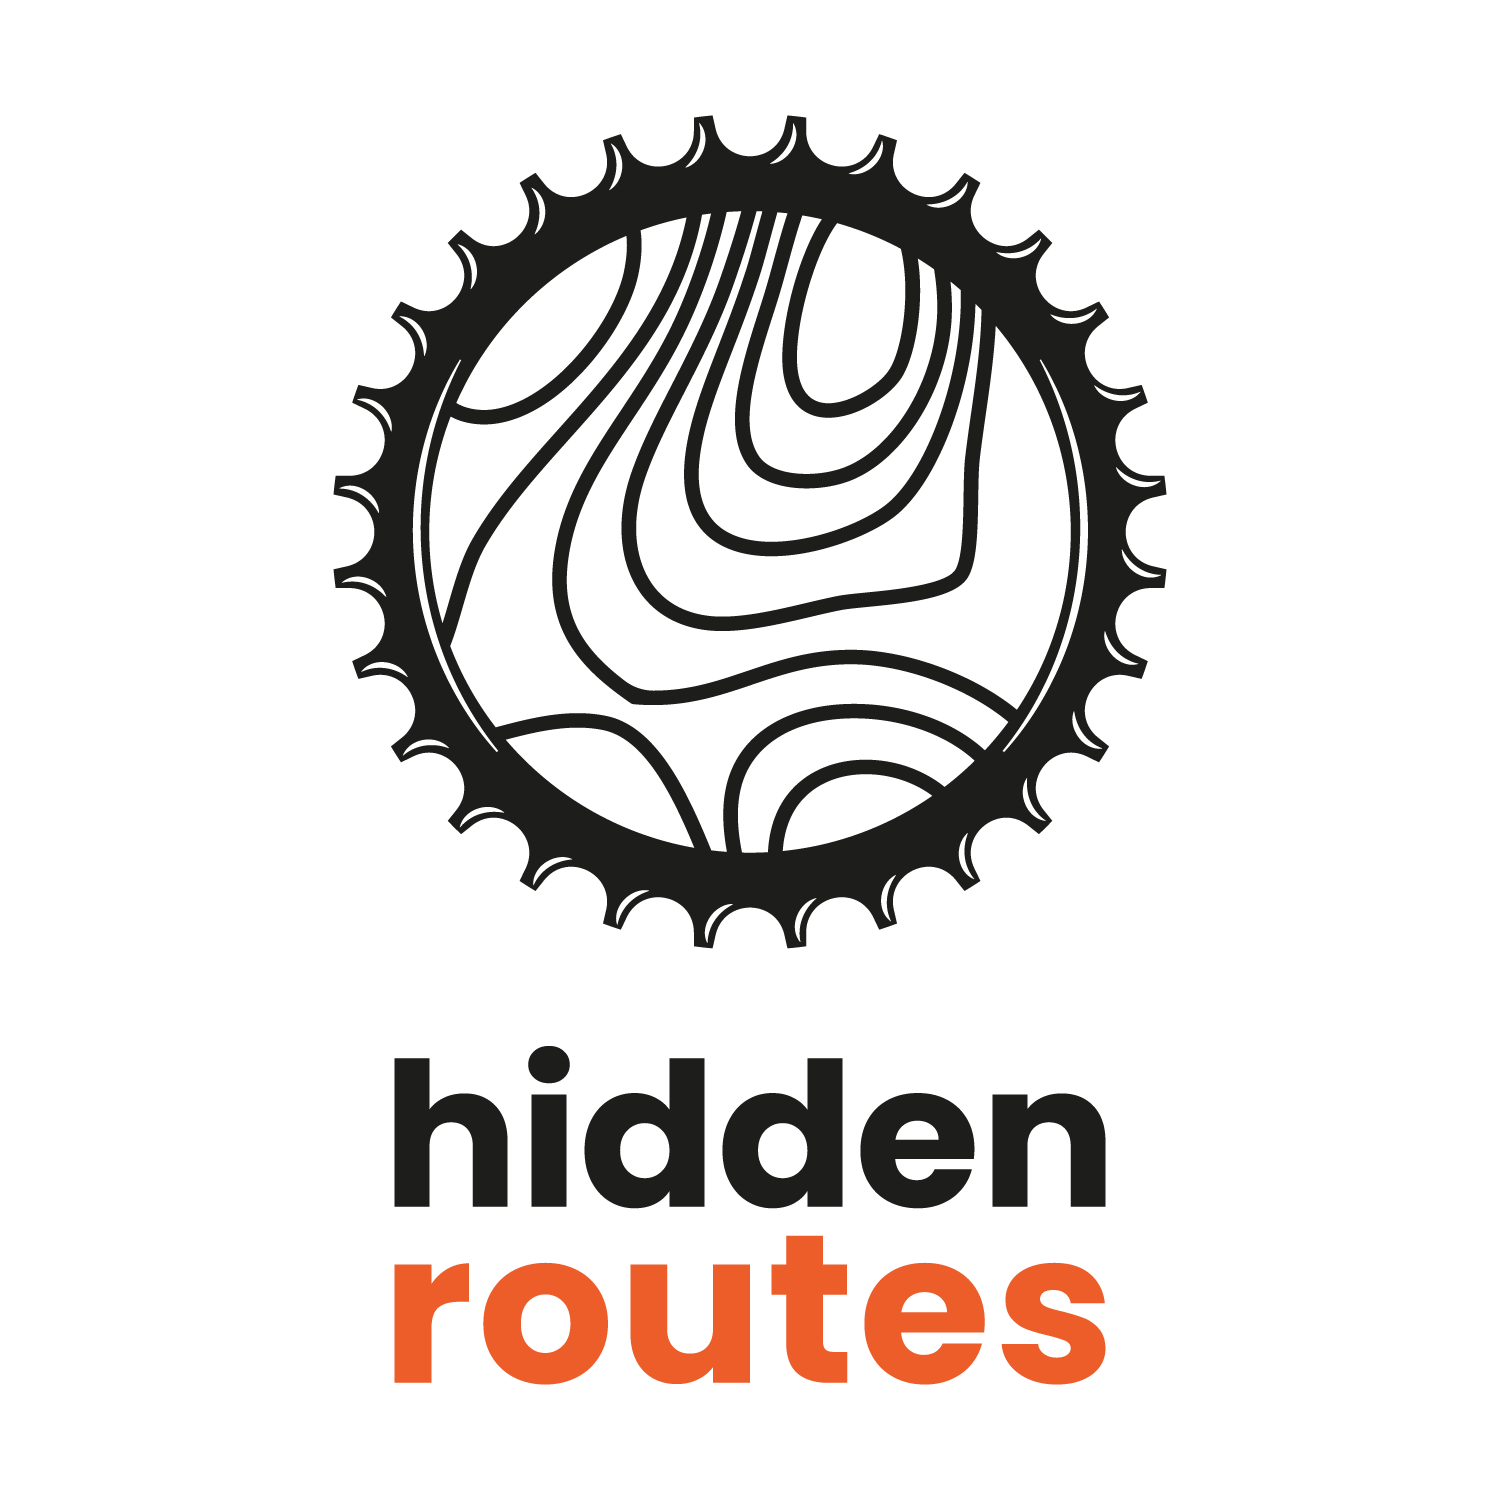 Hidden Routes